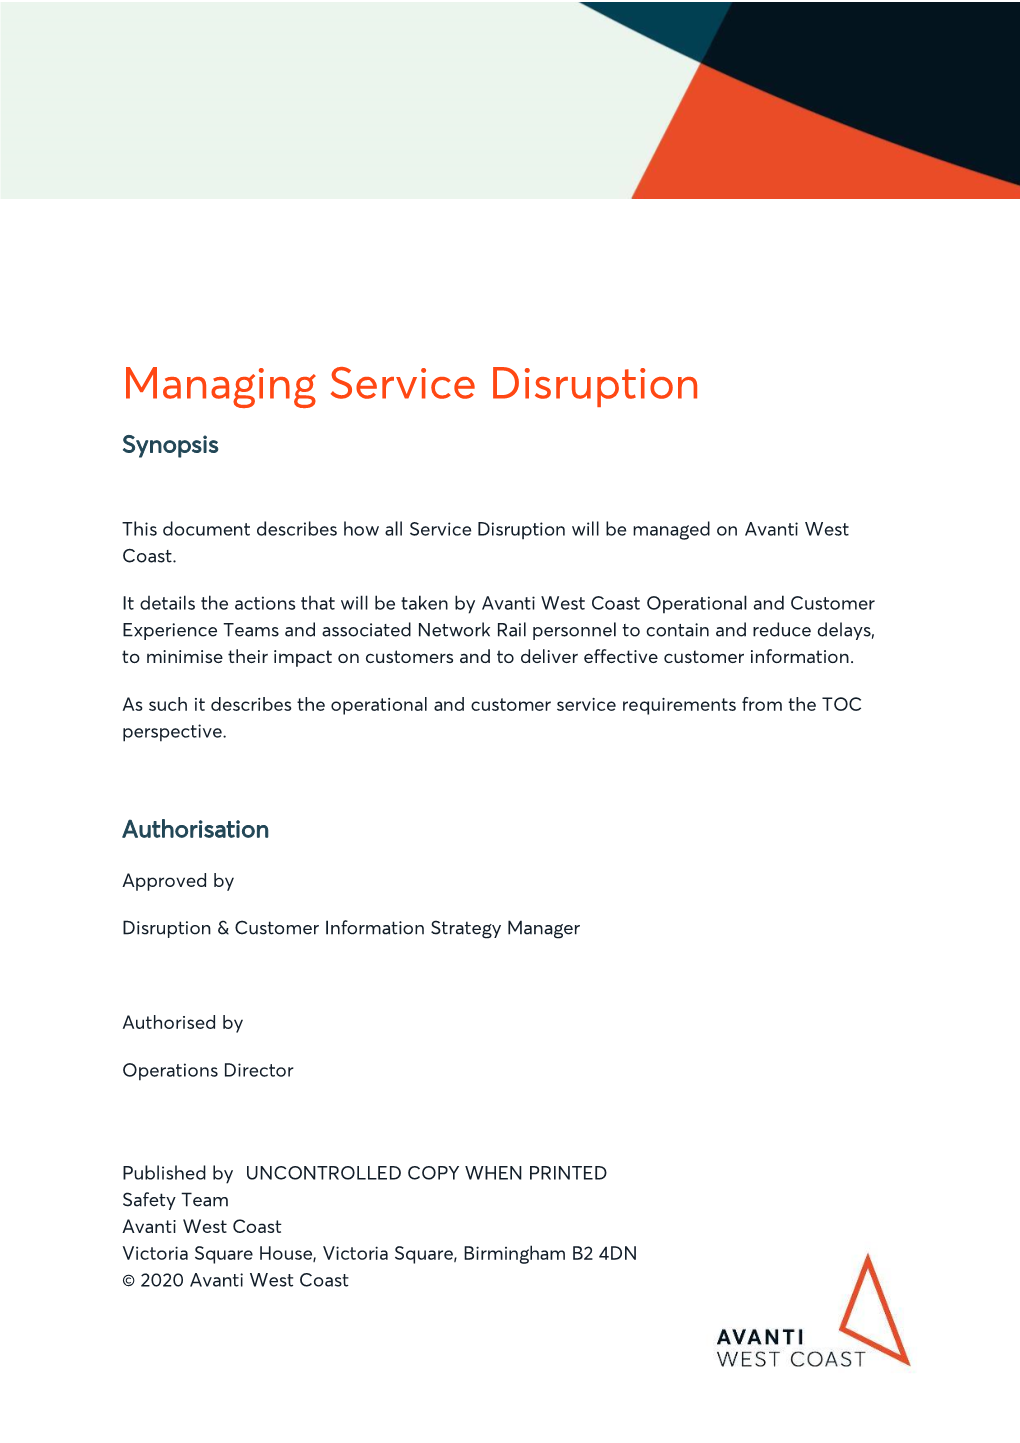 Managing Service Disruption